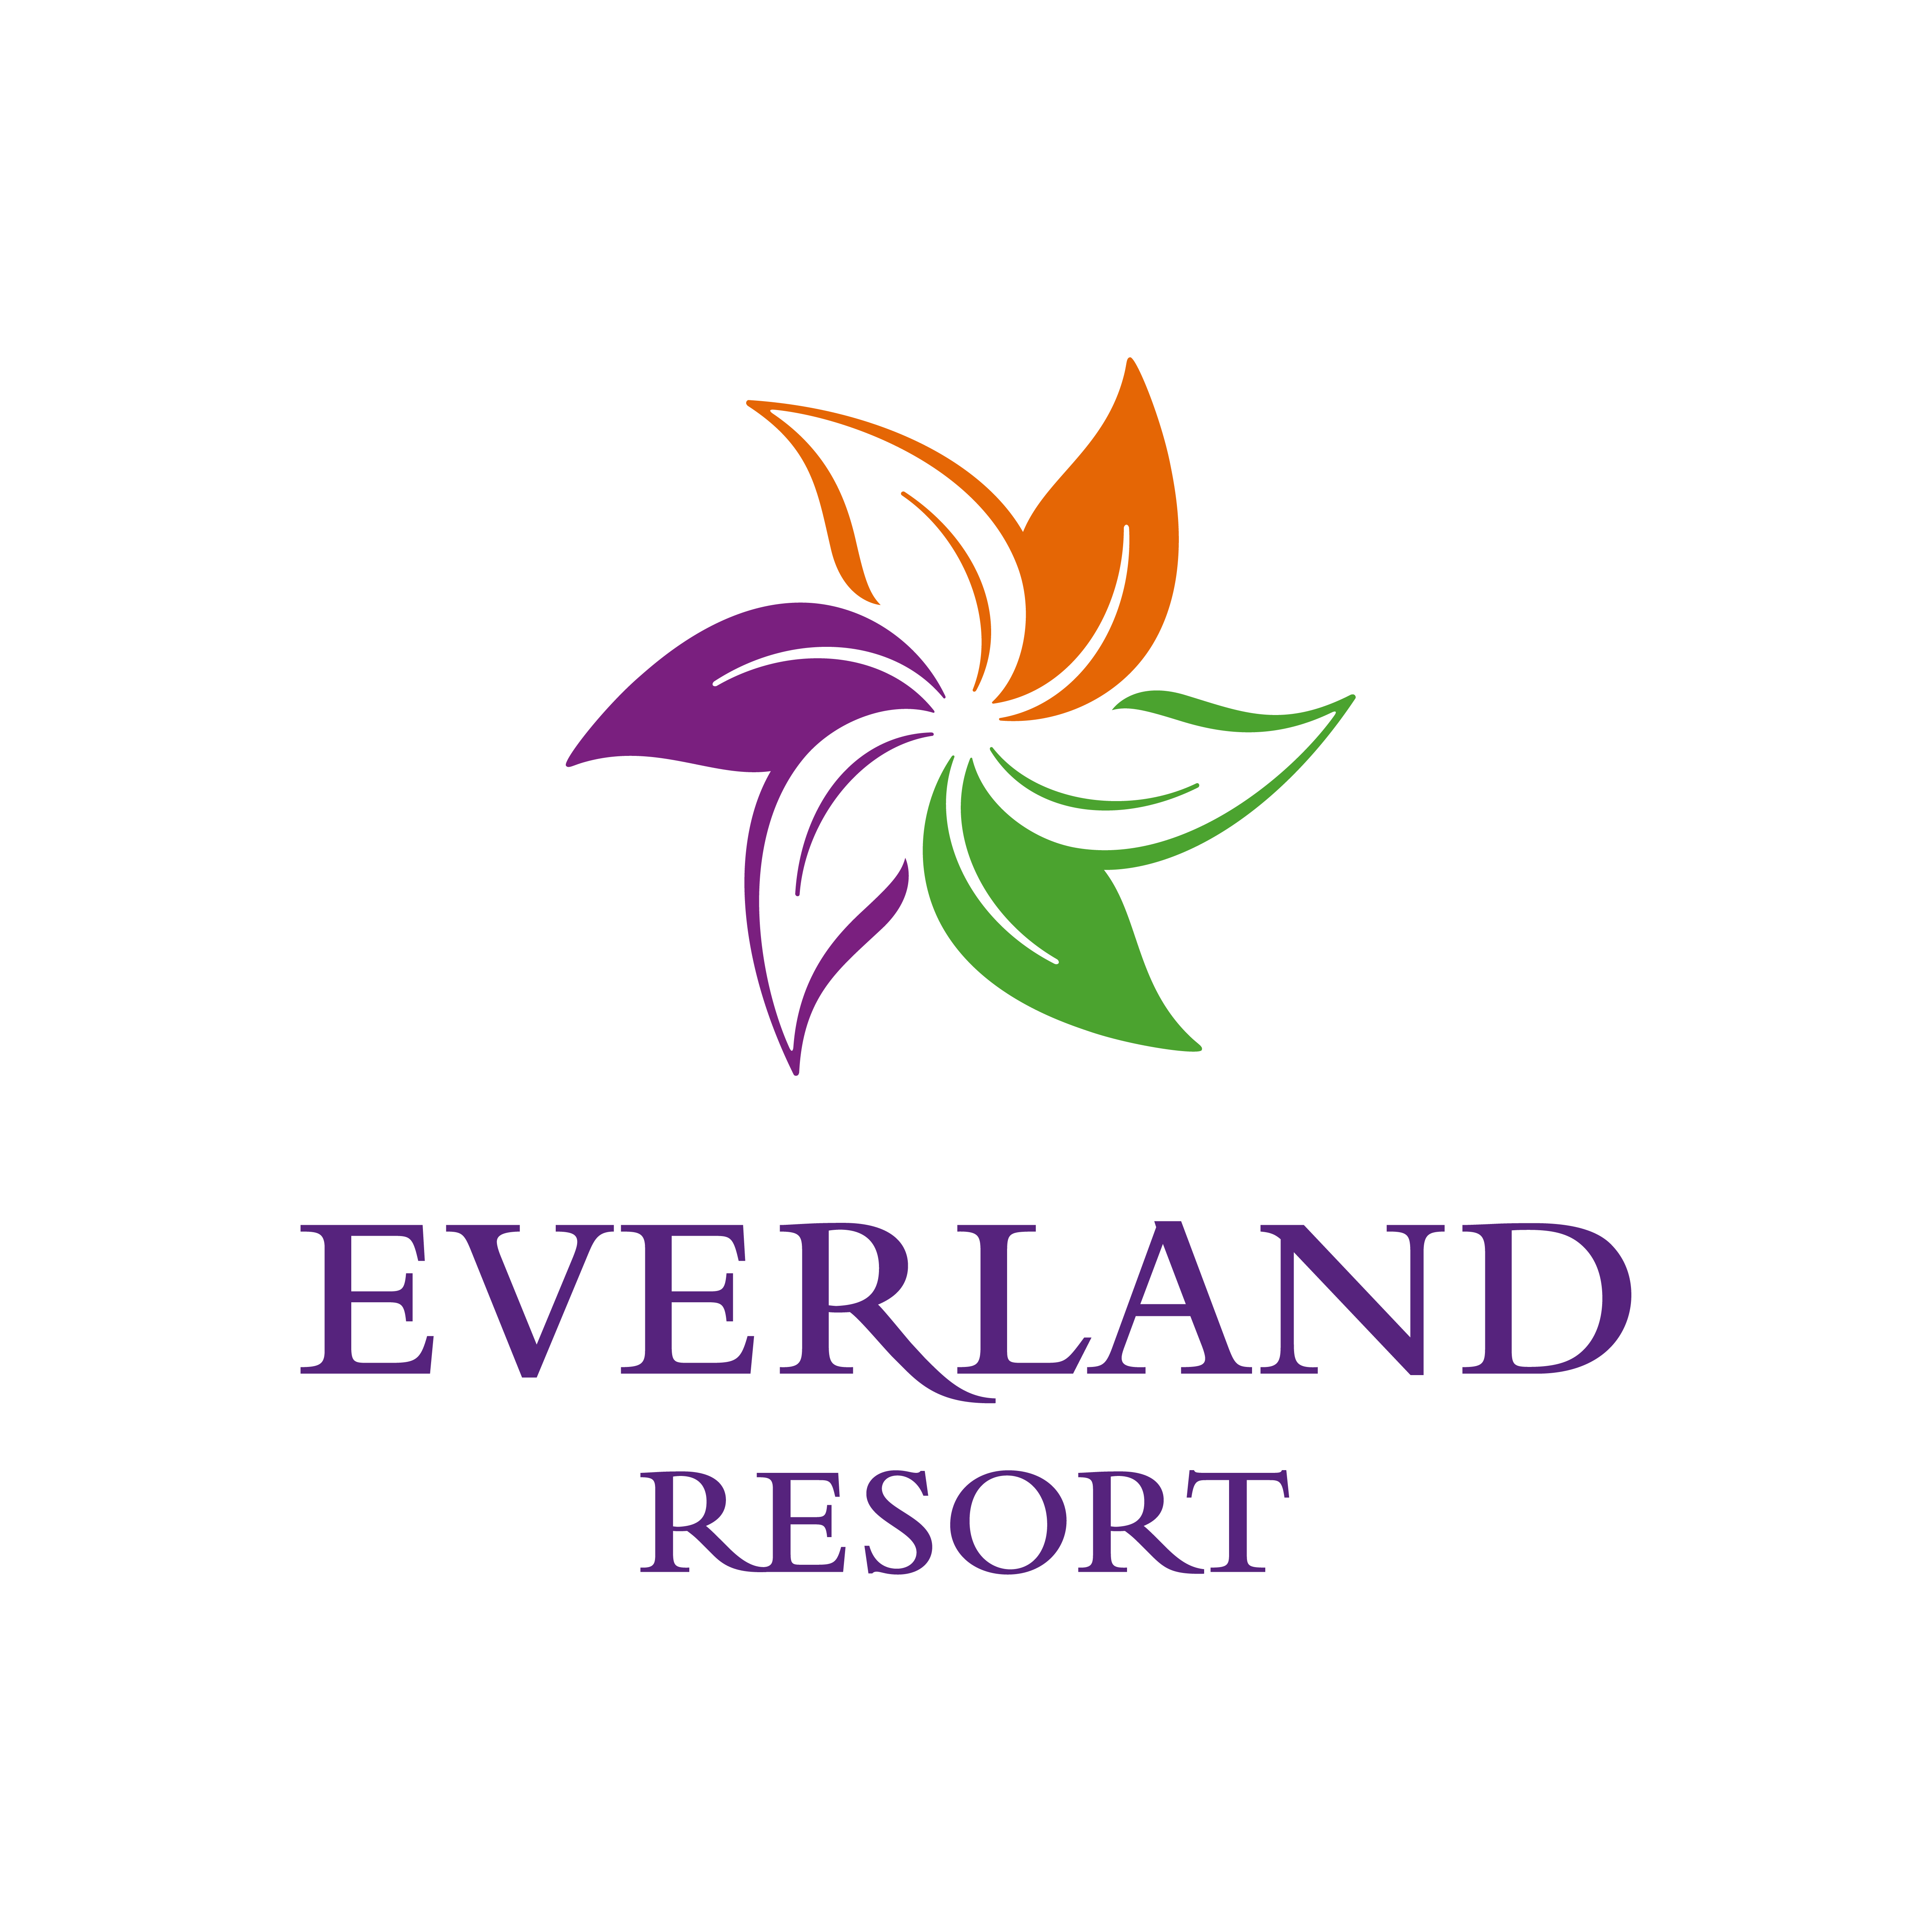 Caribbean Discount Brand Park Bay Resort Everland PNG Image